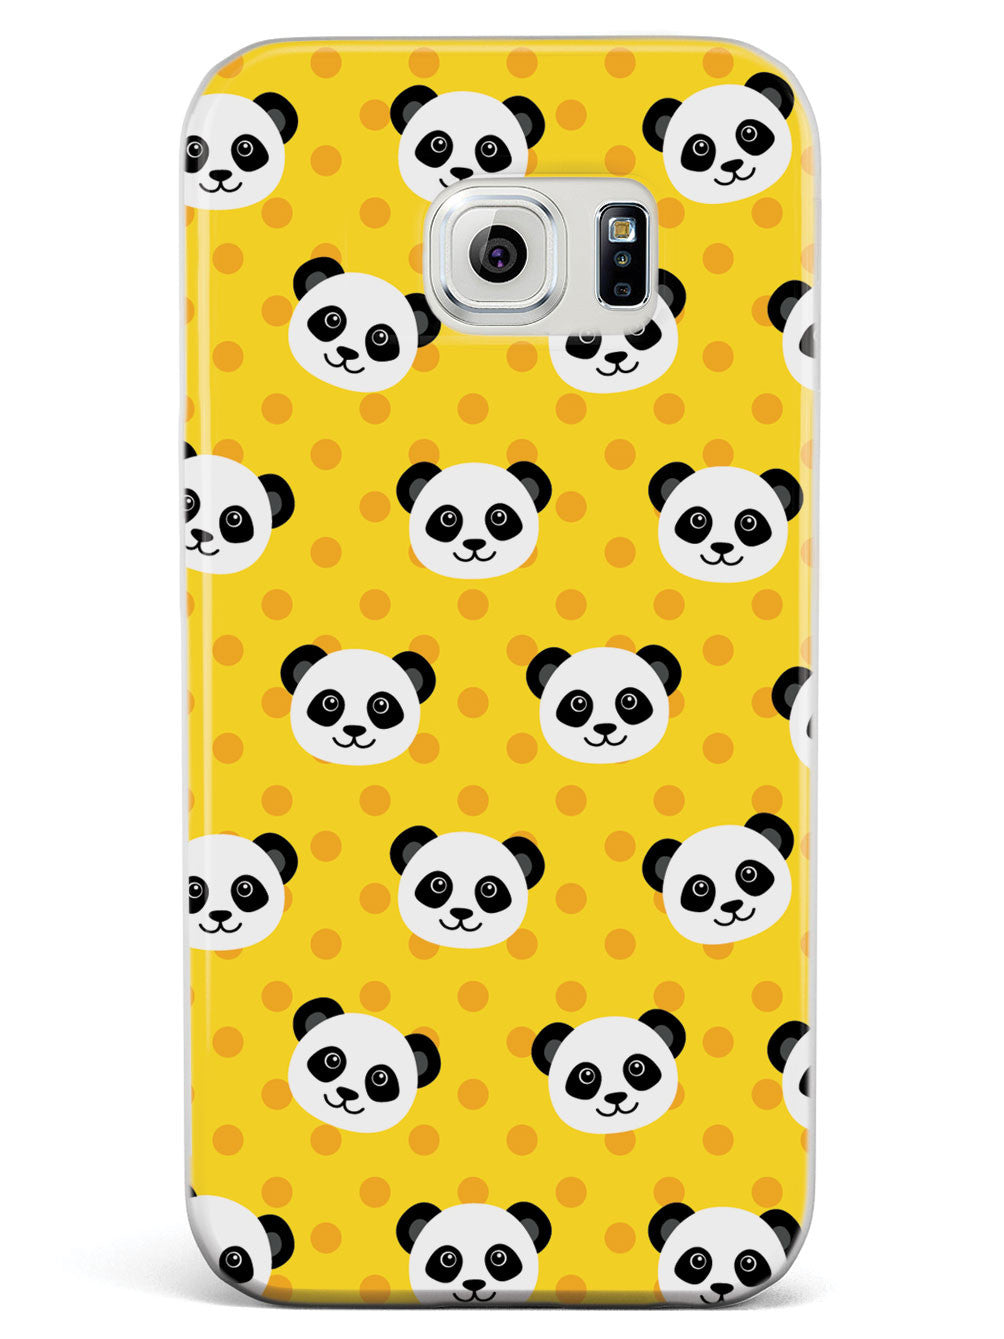 Cute Panda Pattern - Yellow Polka Dots Case